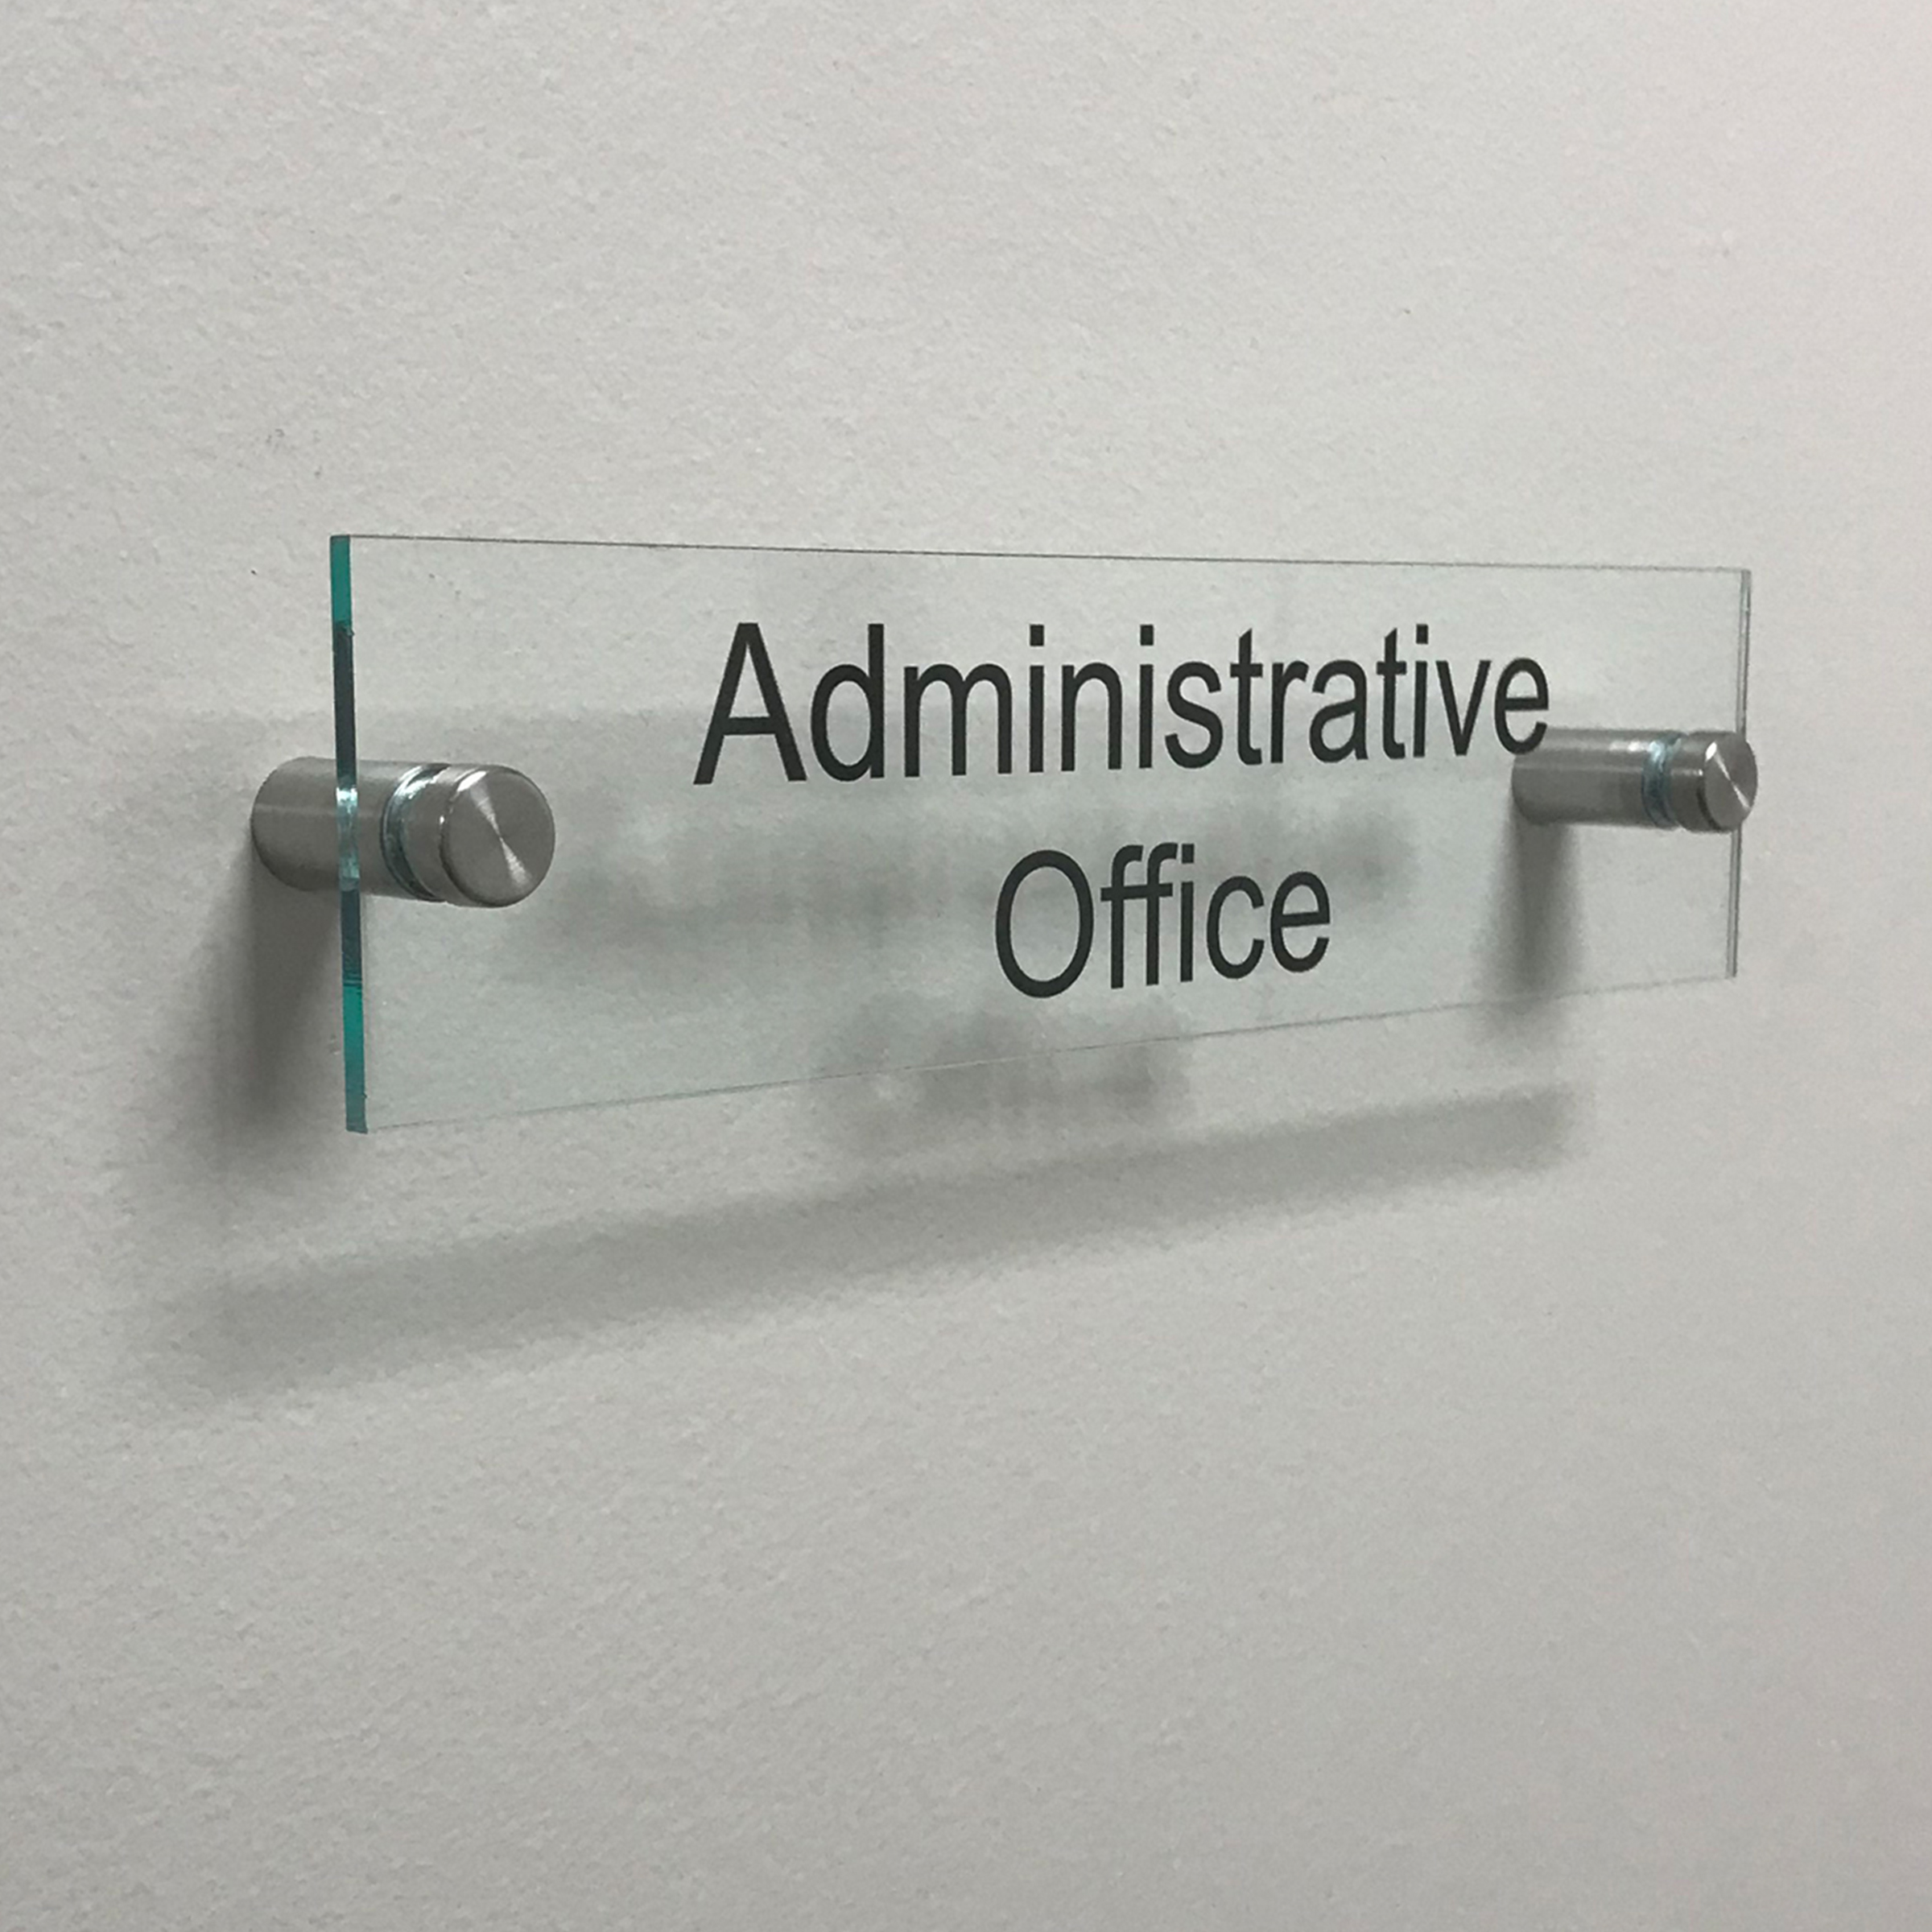 Administrative Office Acrylic Name Plate Sign - Napnameplates.com